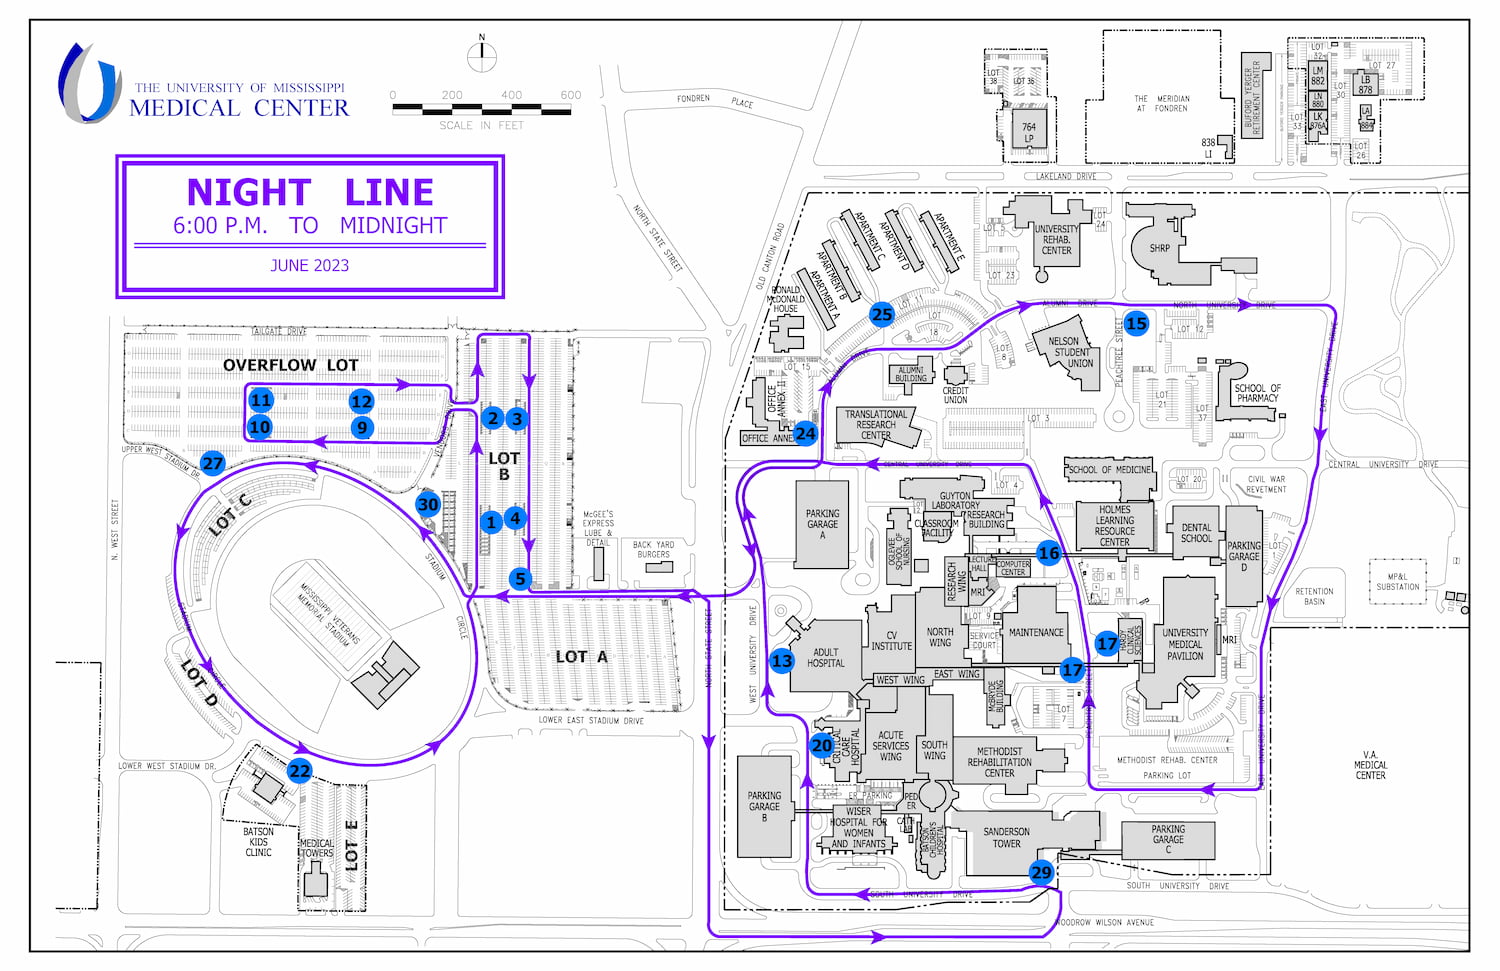 Shuttle Night Line Map - click below for full image long description.